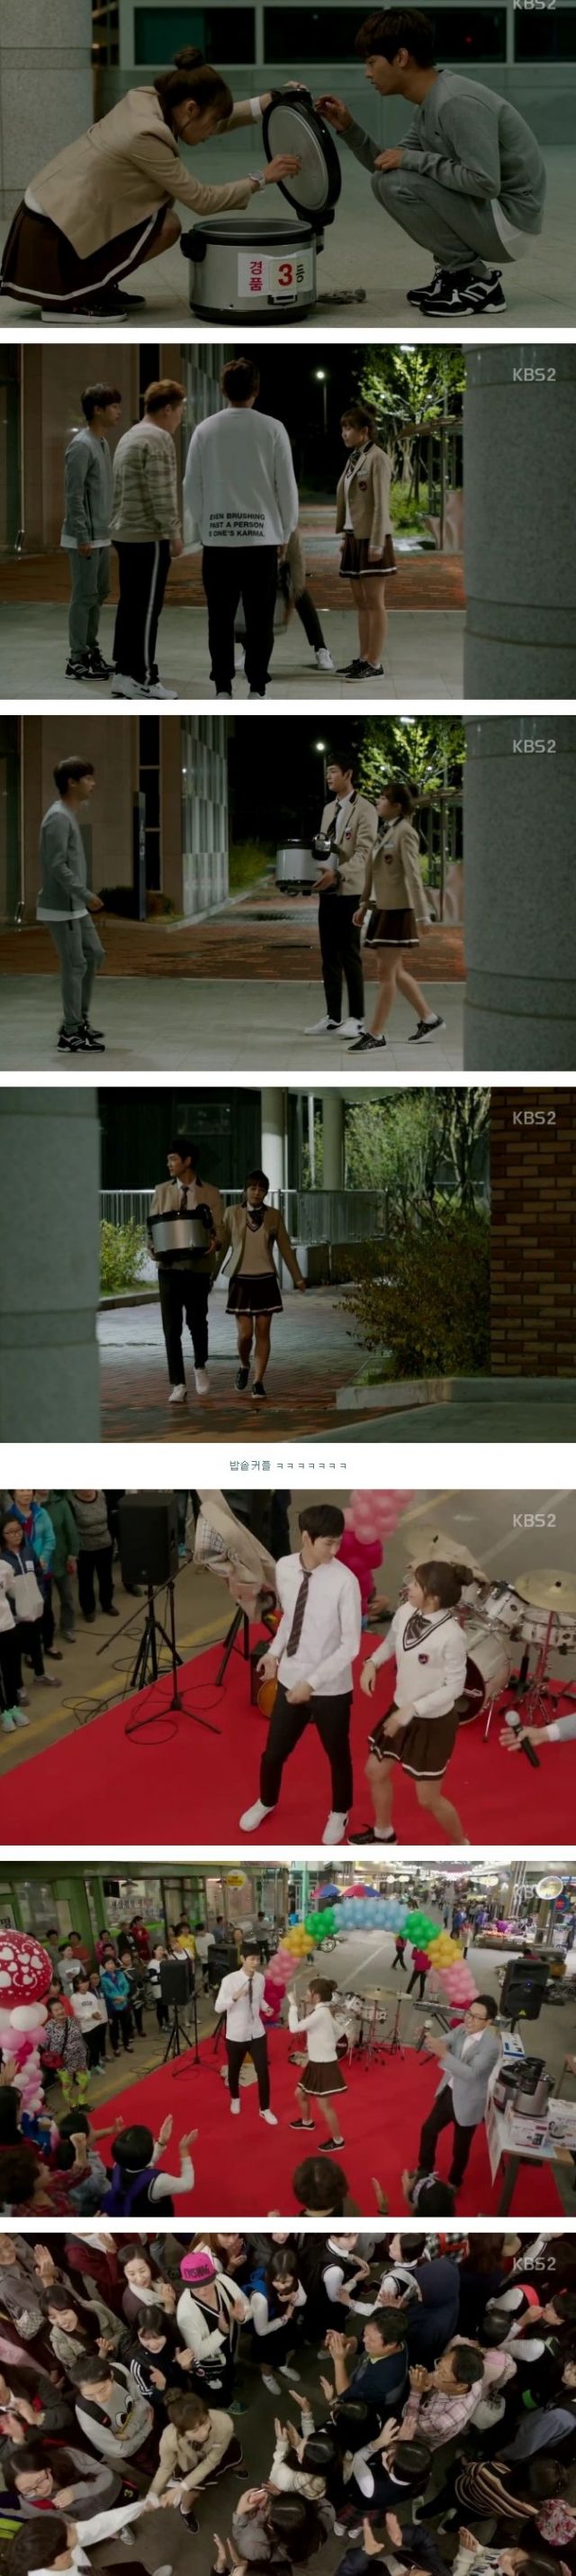 Download film korea who are you school 2015 episode 15